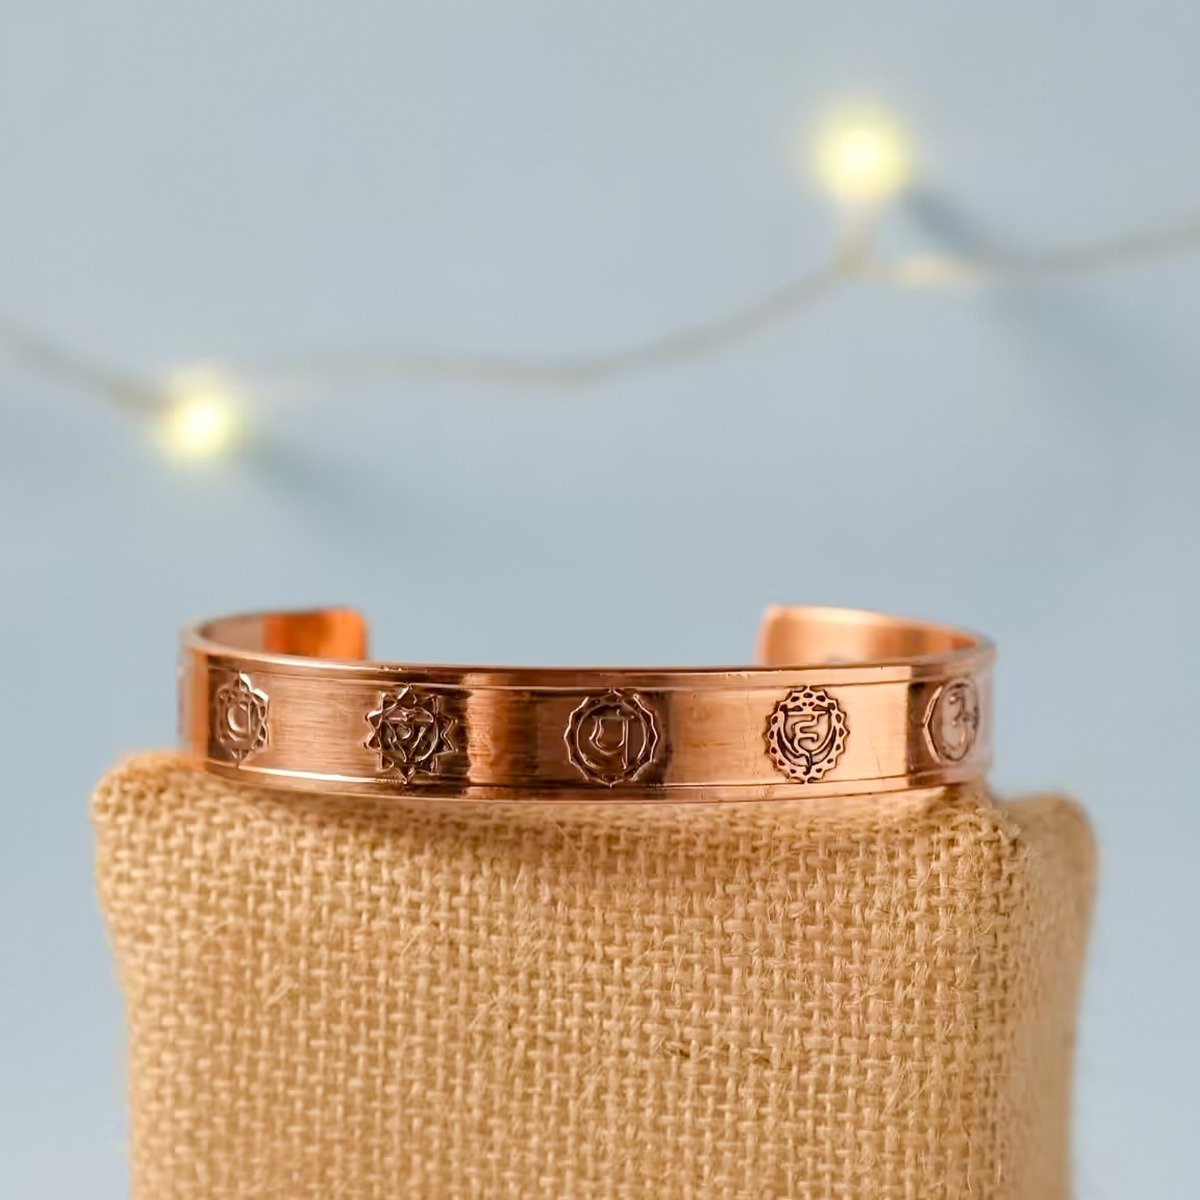 Copper Ring Benefits,तांब्याची अंगठी घालण्याचे 'हे' आहेत फायदे - copper  ring benefits importance in astrology and health - Maharashtra Times